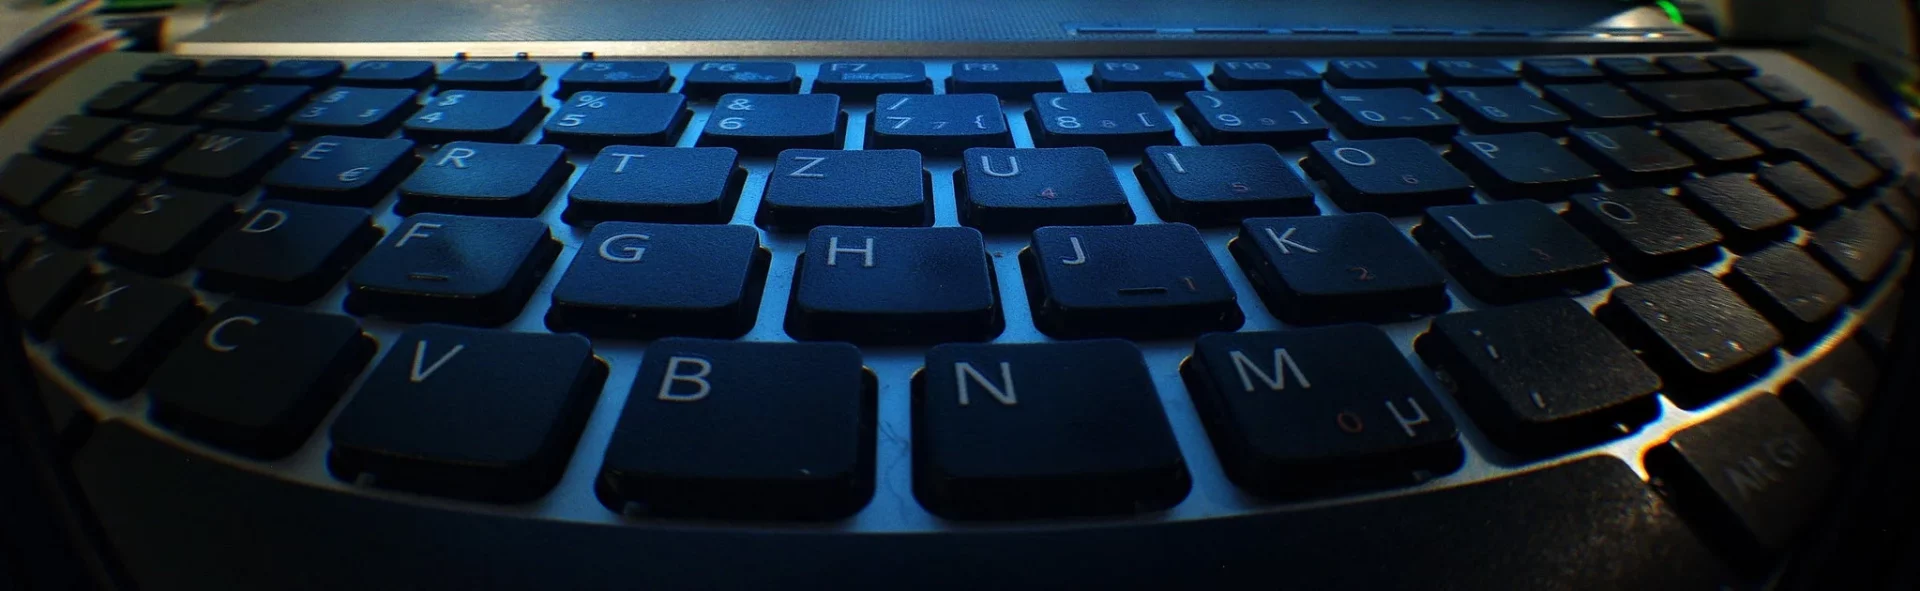 Laptop keyboard of an Escadra employee